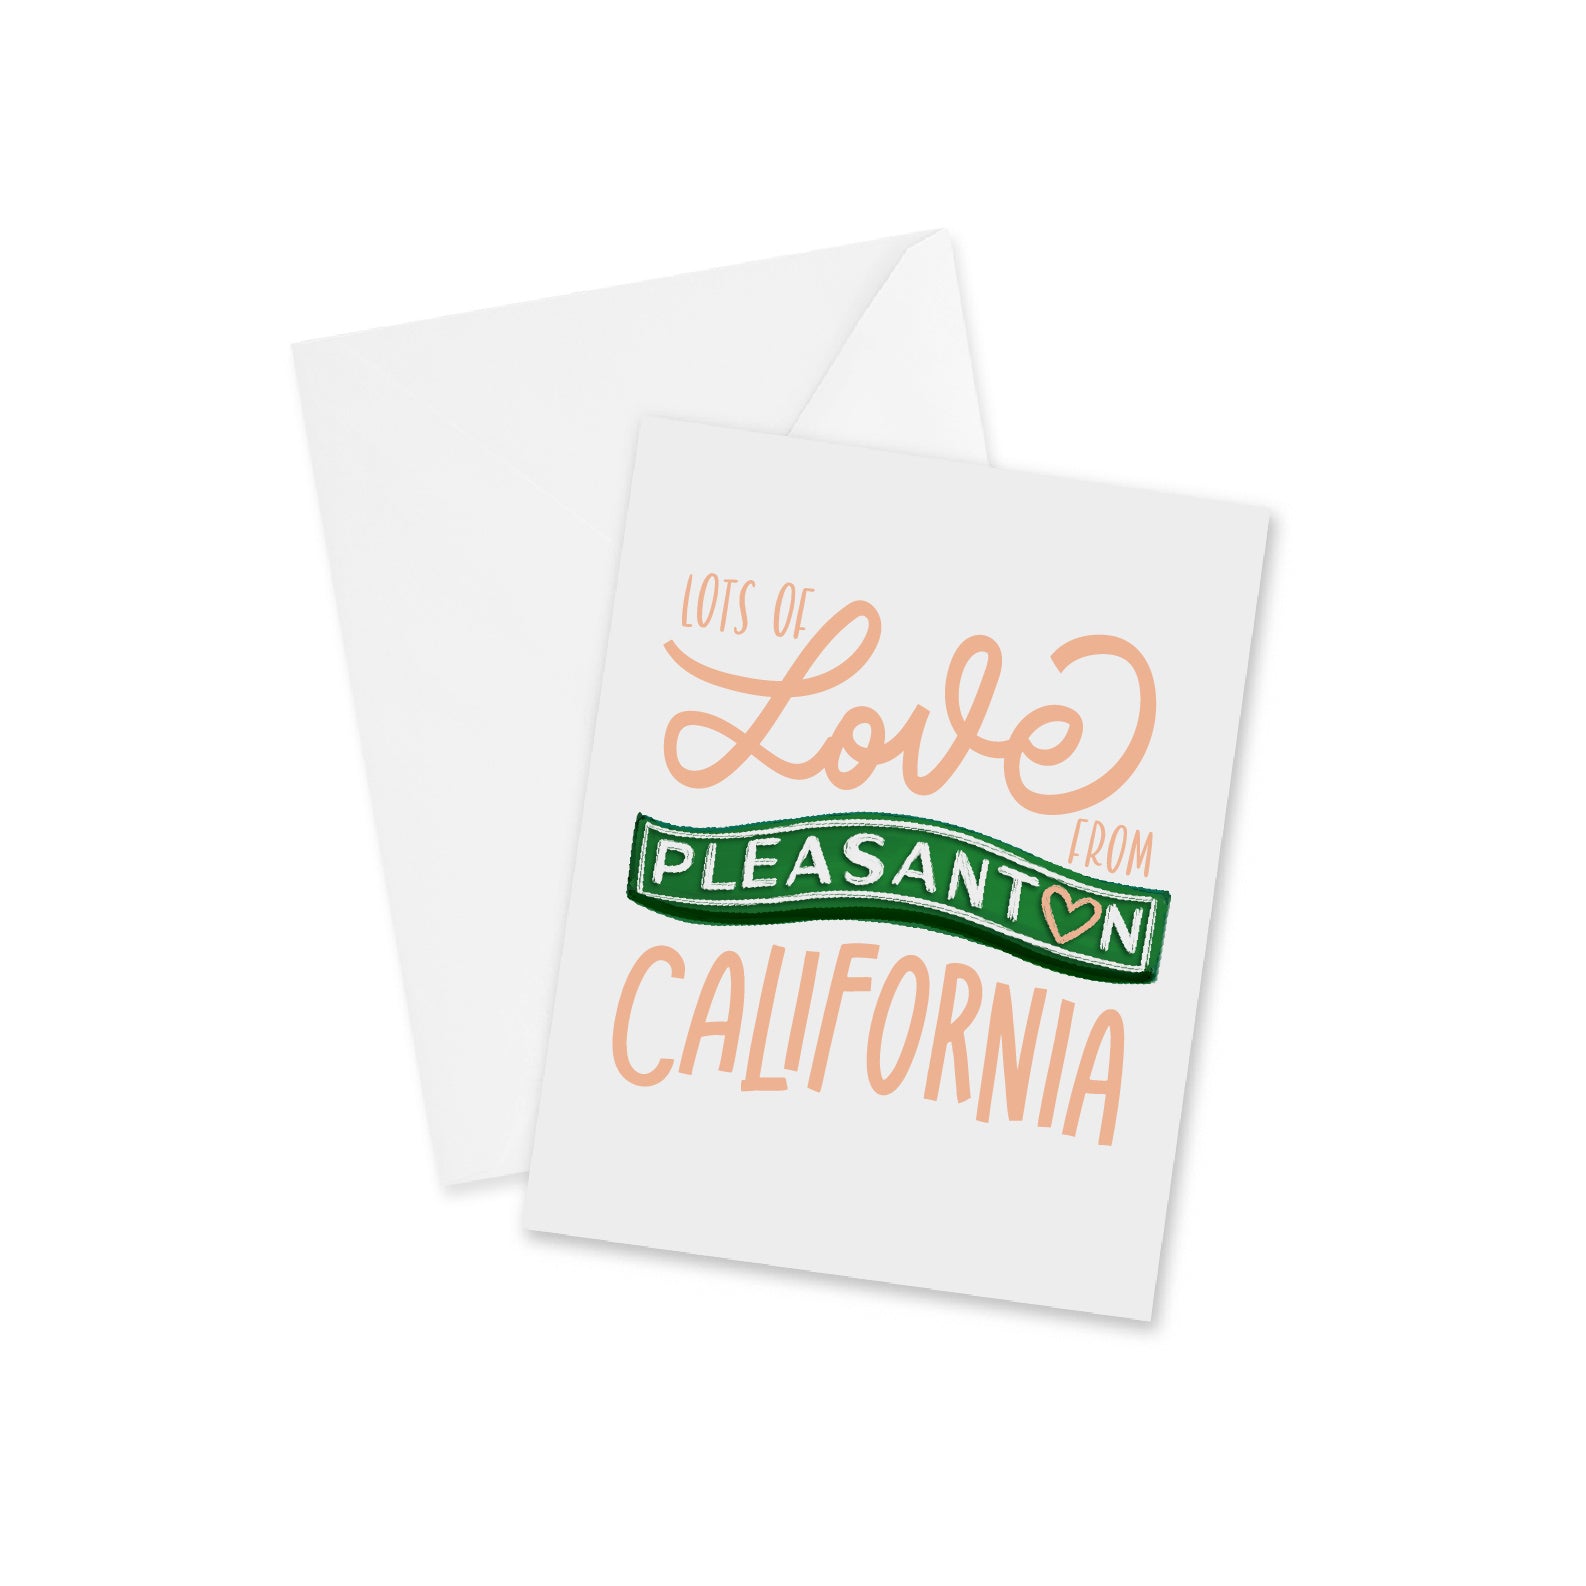 Lots Of Love From Pleasanton Notecard